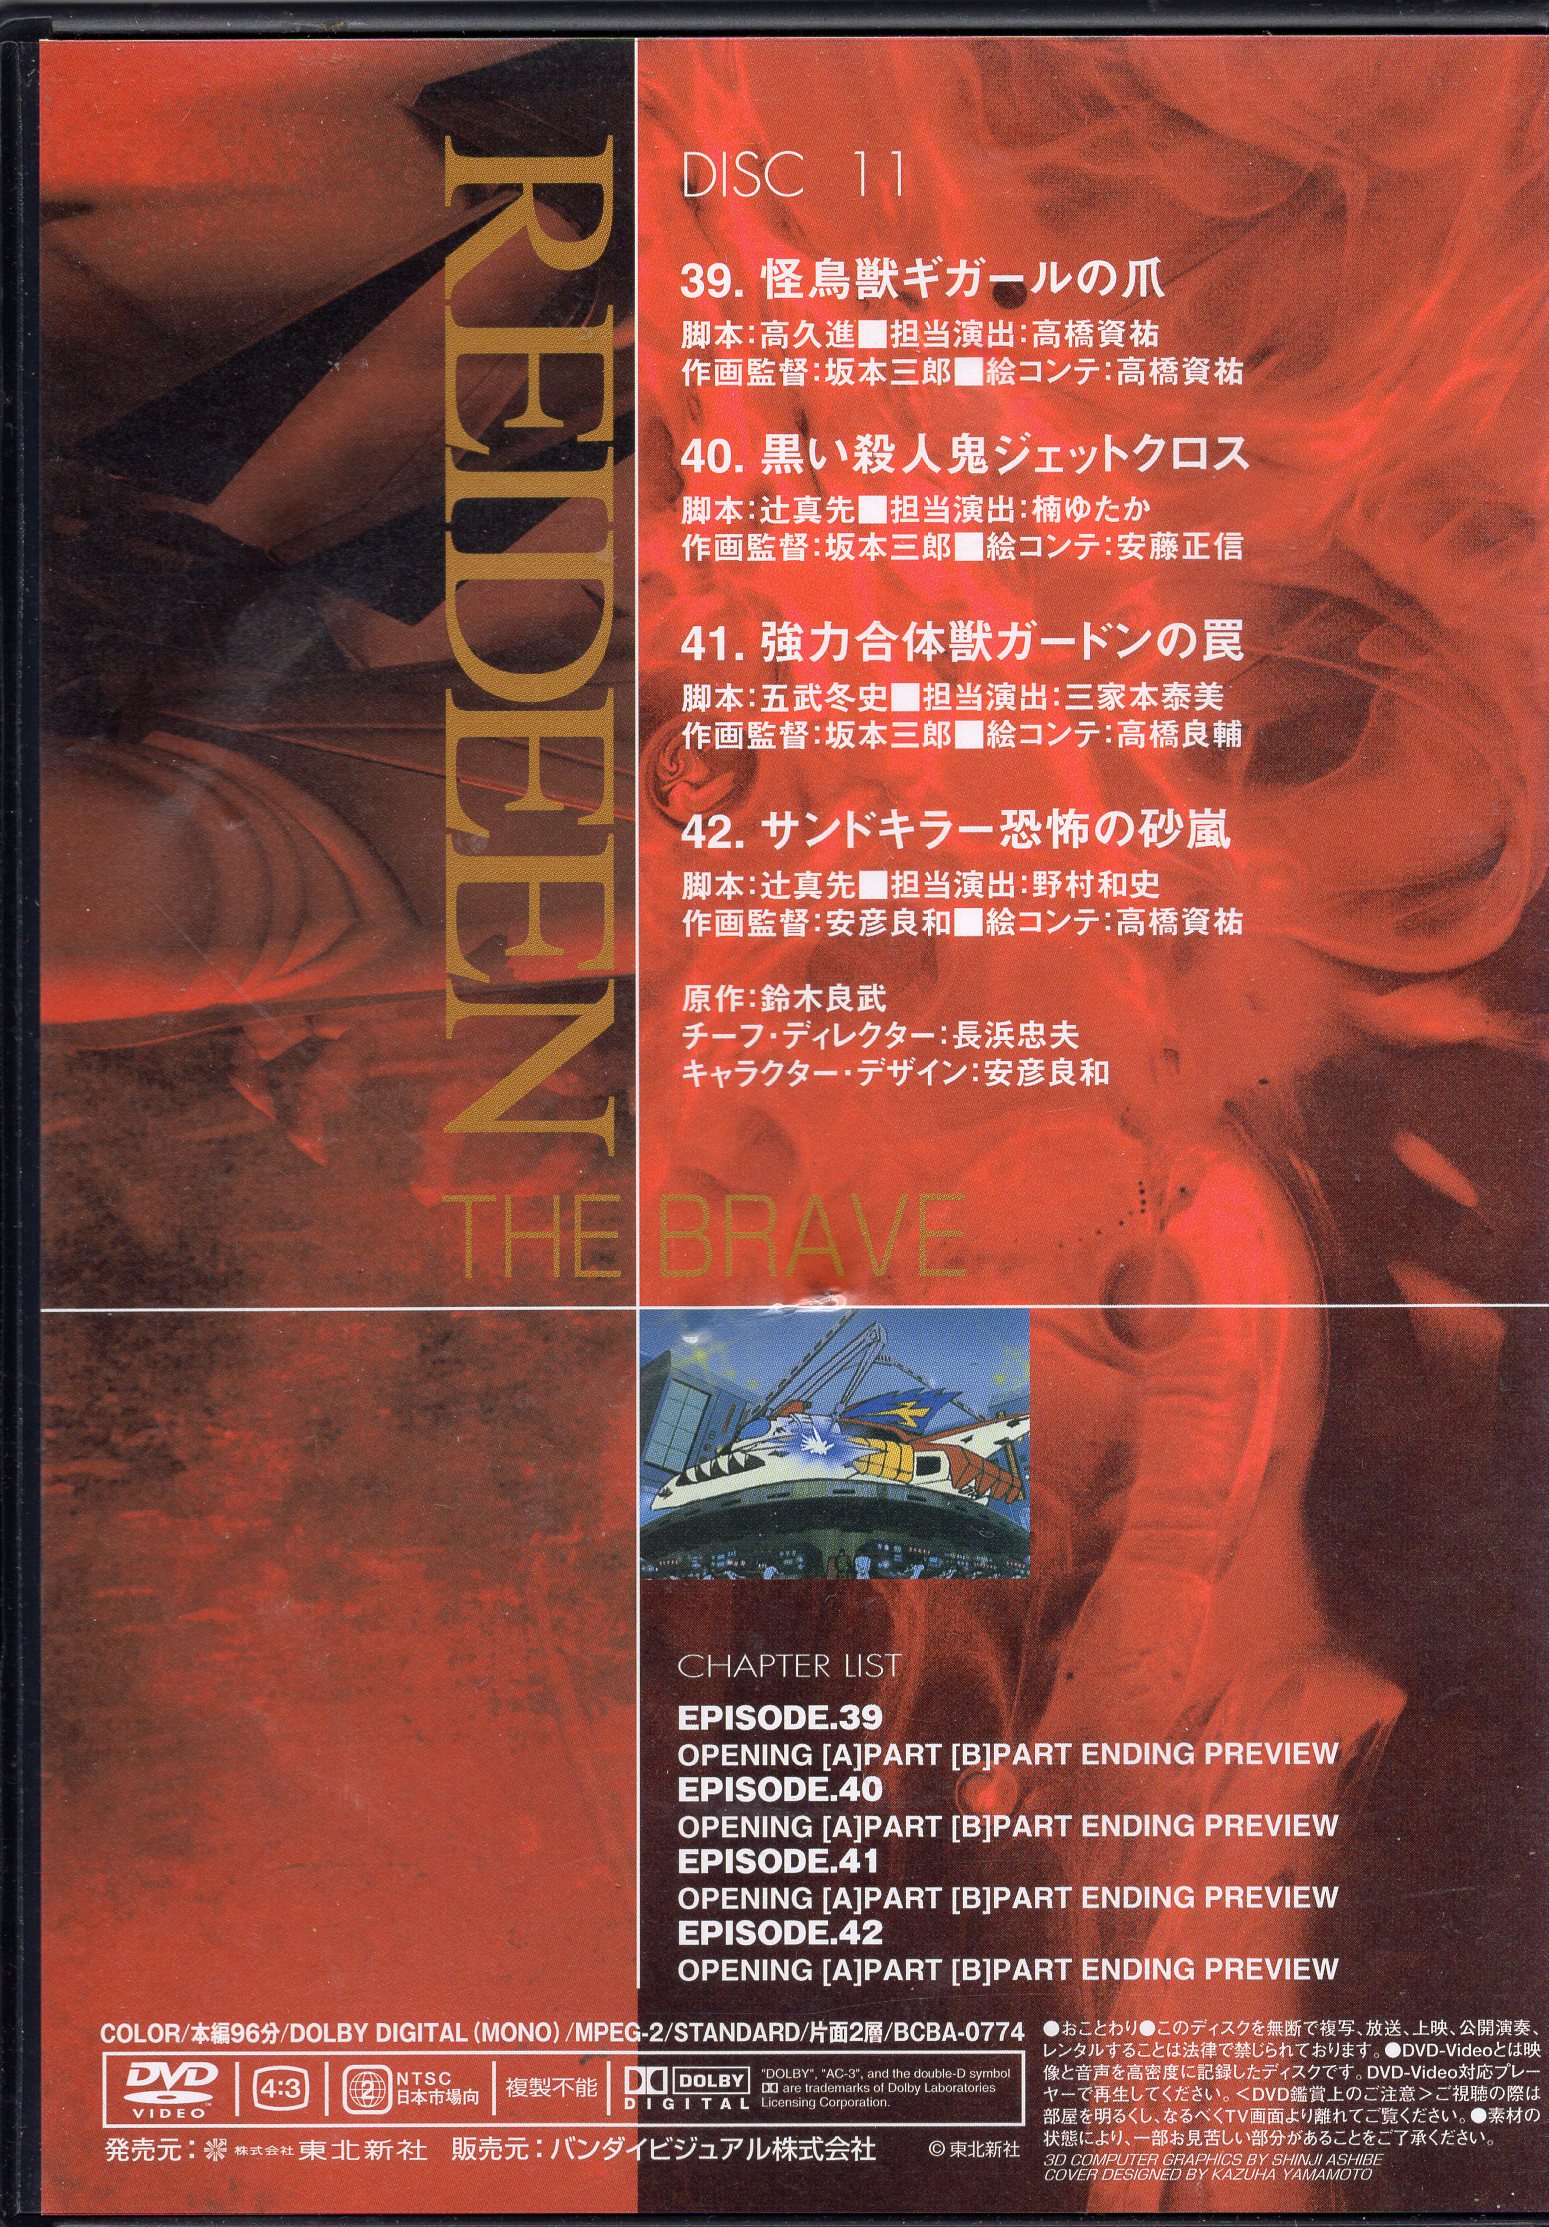 Anime Dvd Yuusha Raideen Brave Reideen Dvd Memorial Box Complete 2 Volume Set Mandarake Online Shop